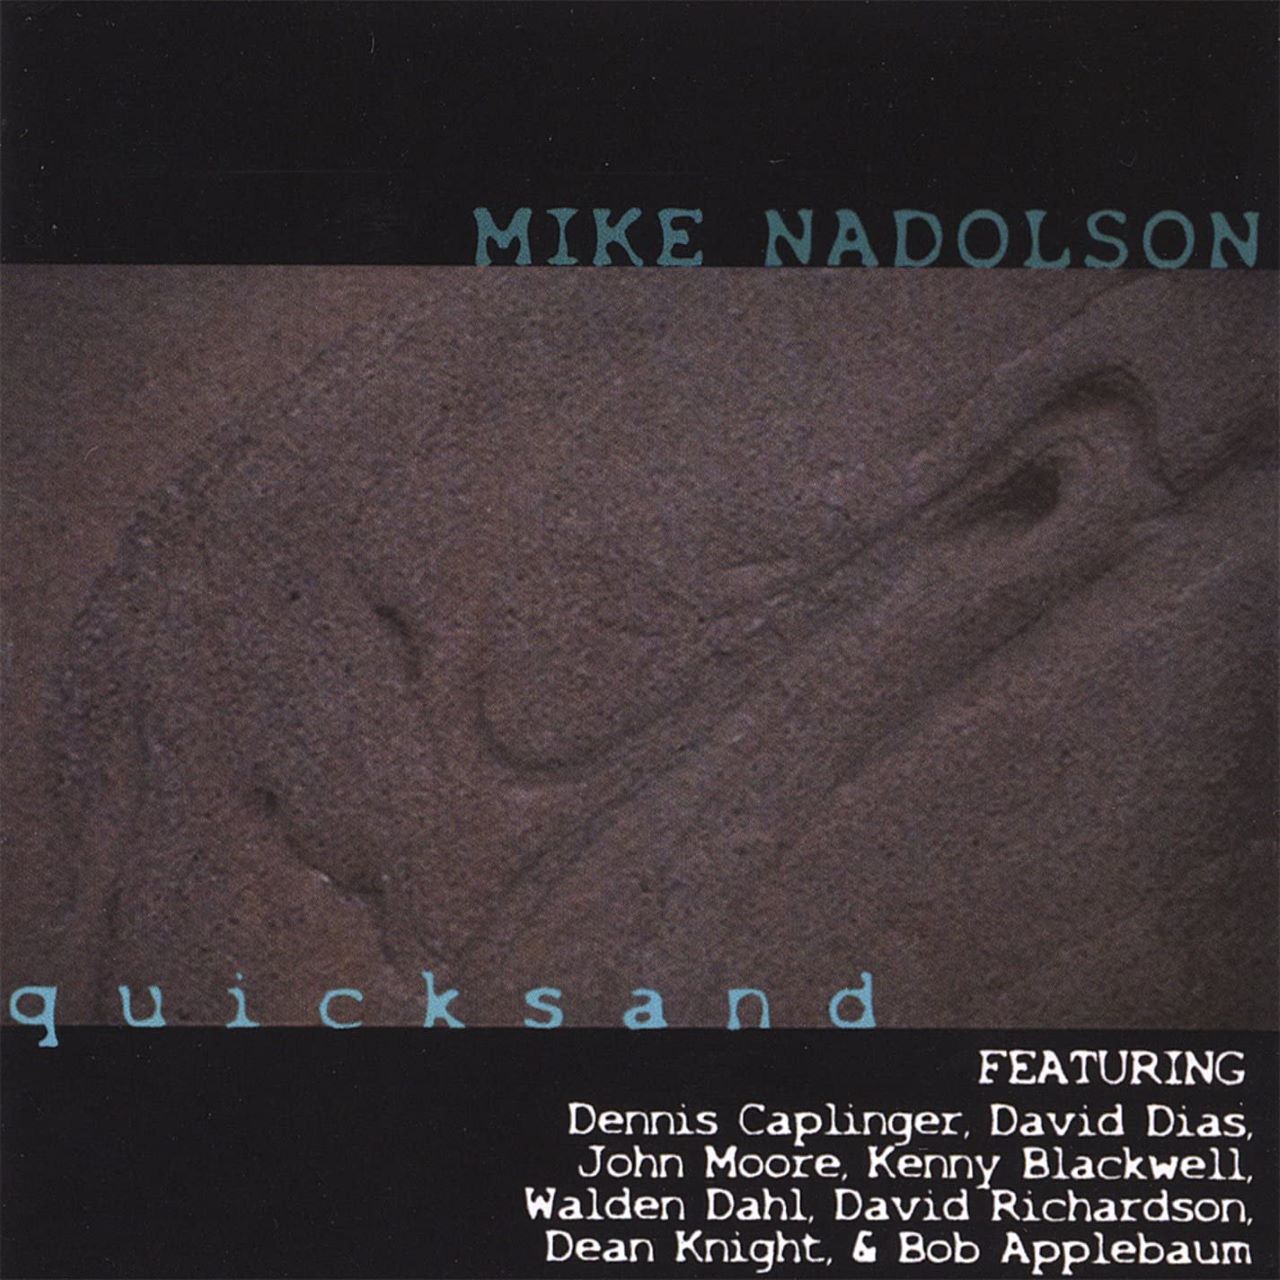 Mike Nadolson - Quicksand cover album